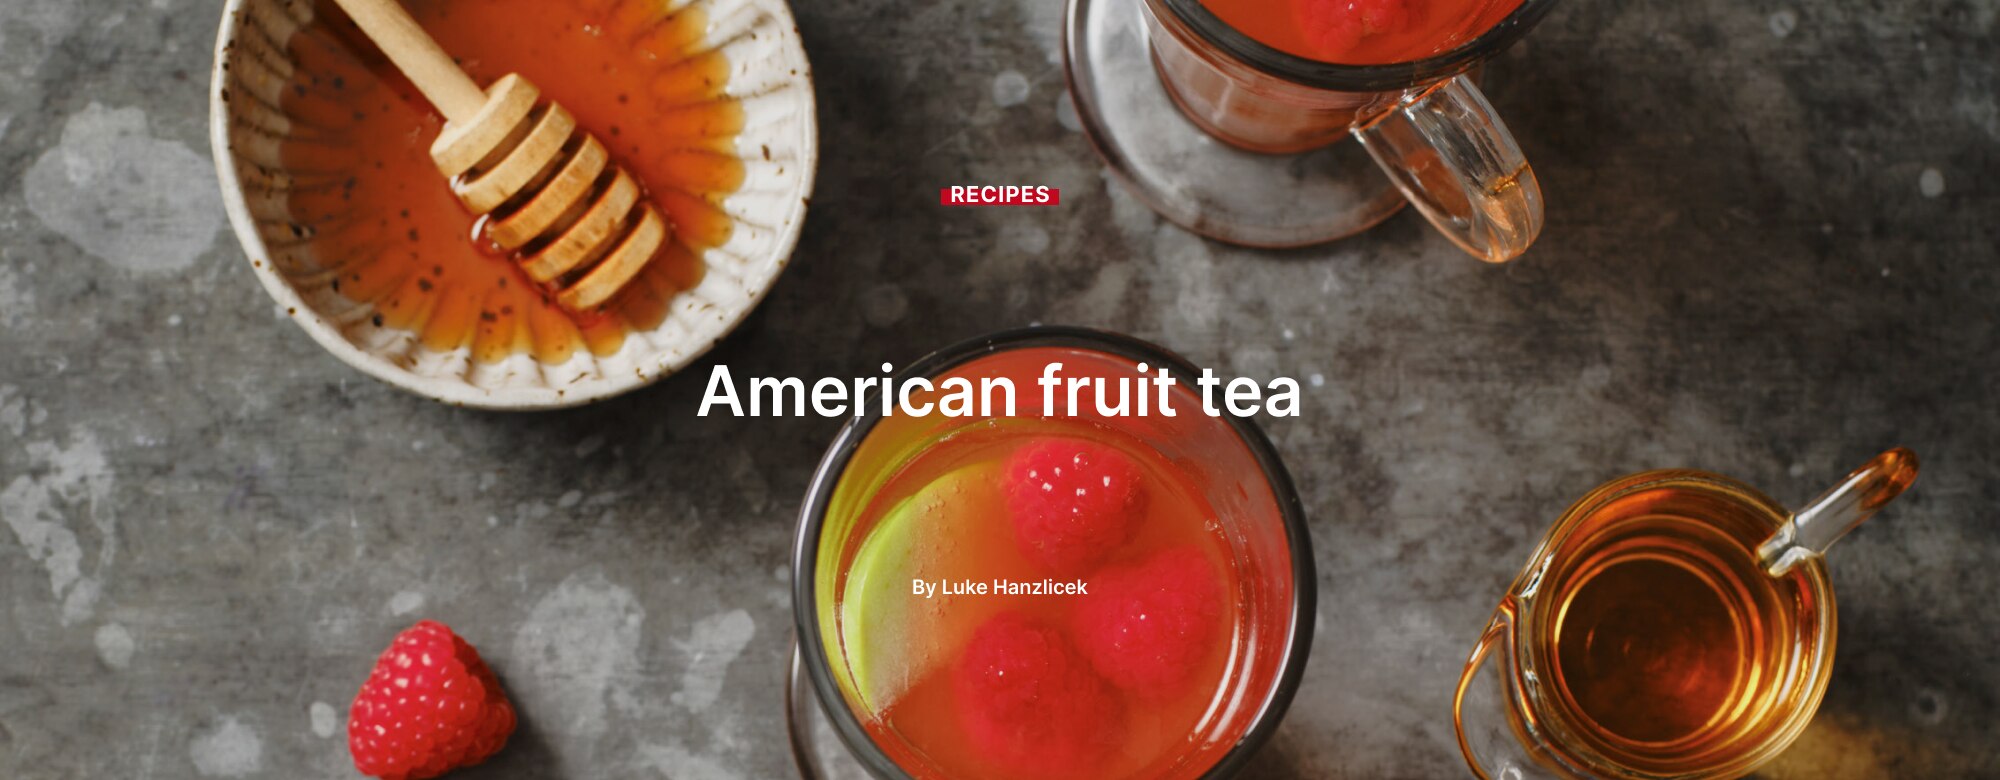 American fruit tea